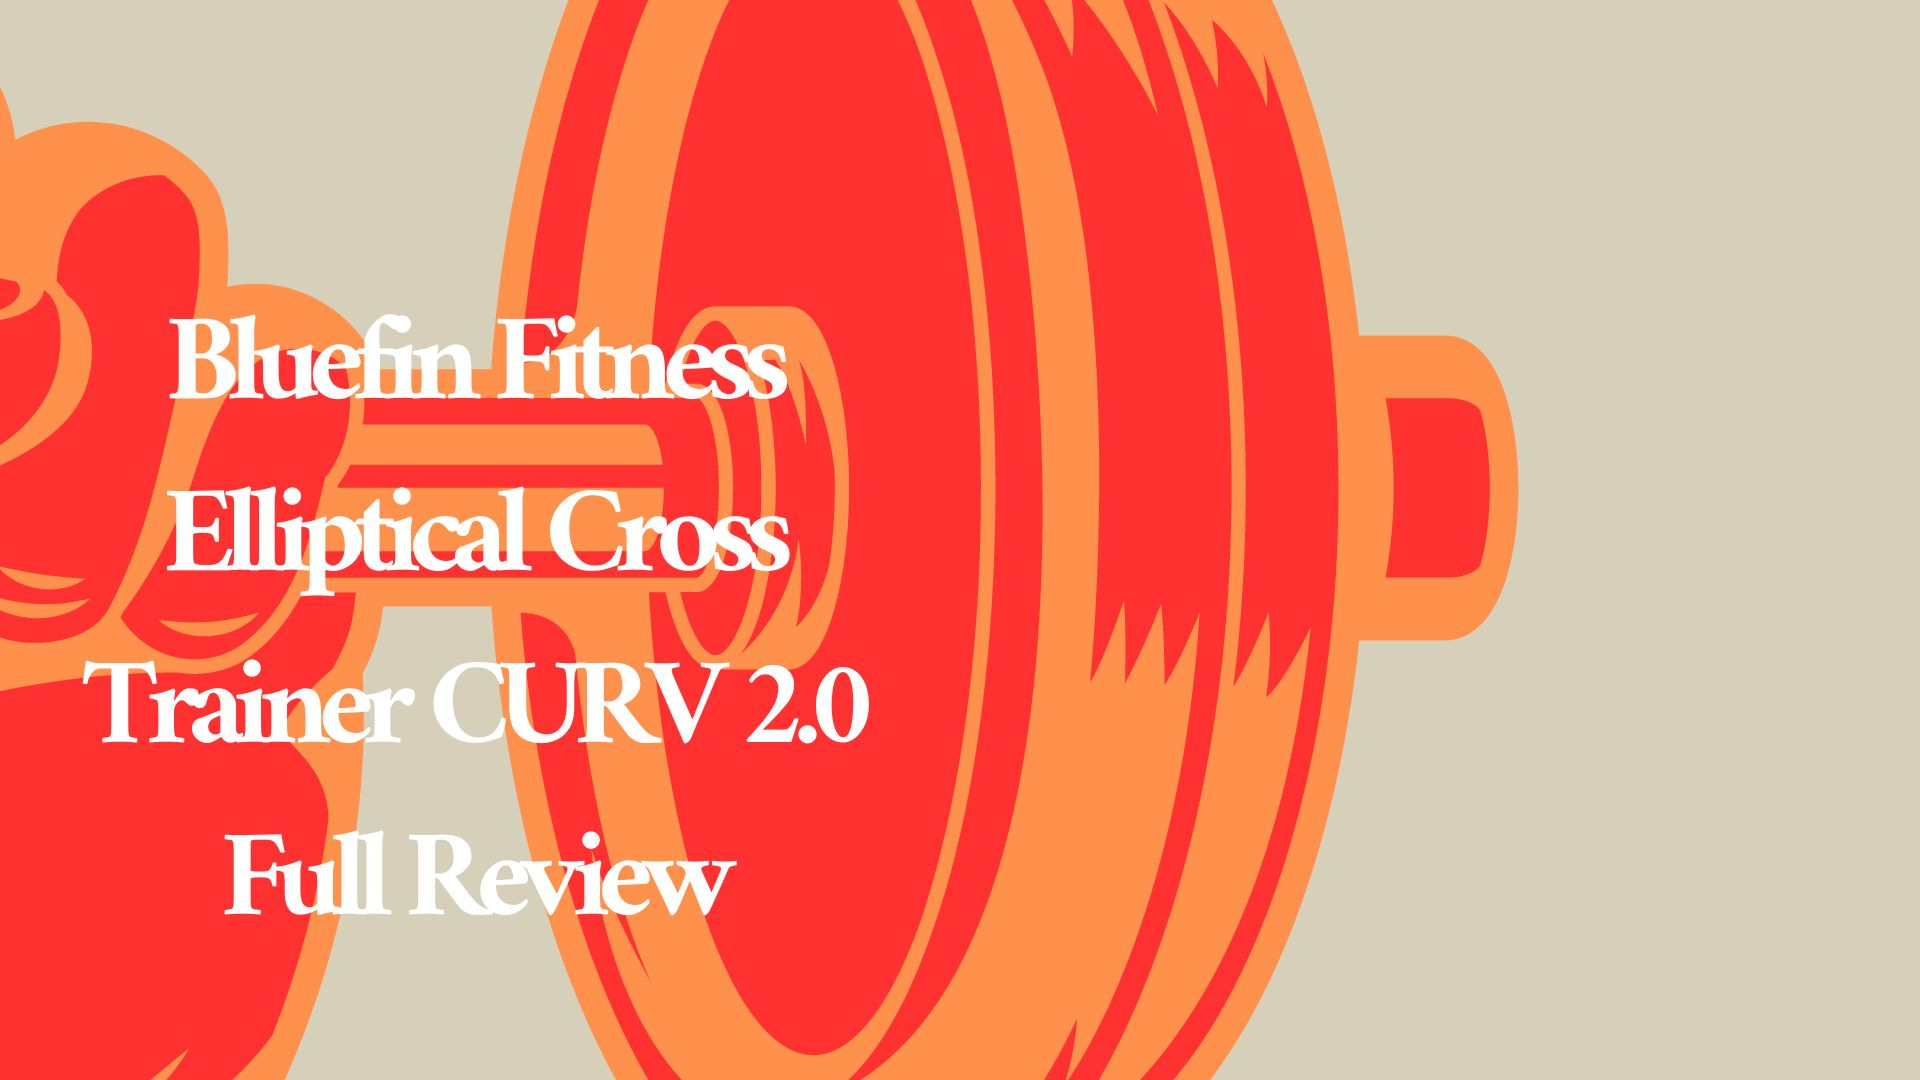 Bluefin Fitness Elliptical Cross Trainer CURV 2.0 Full Review